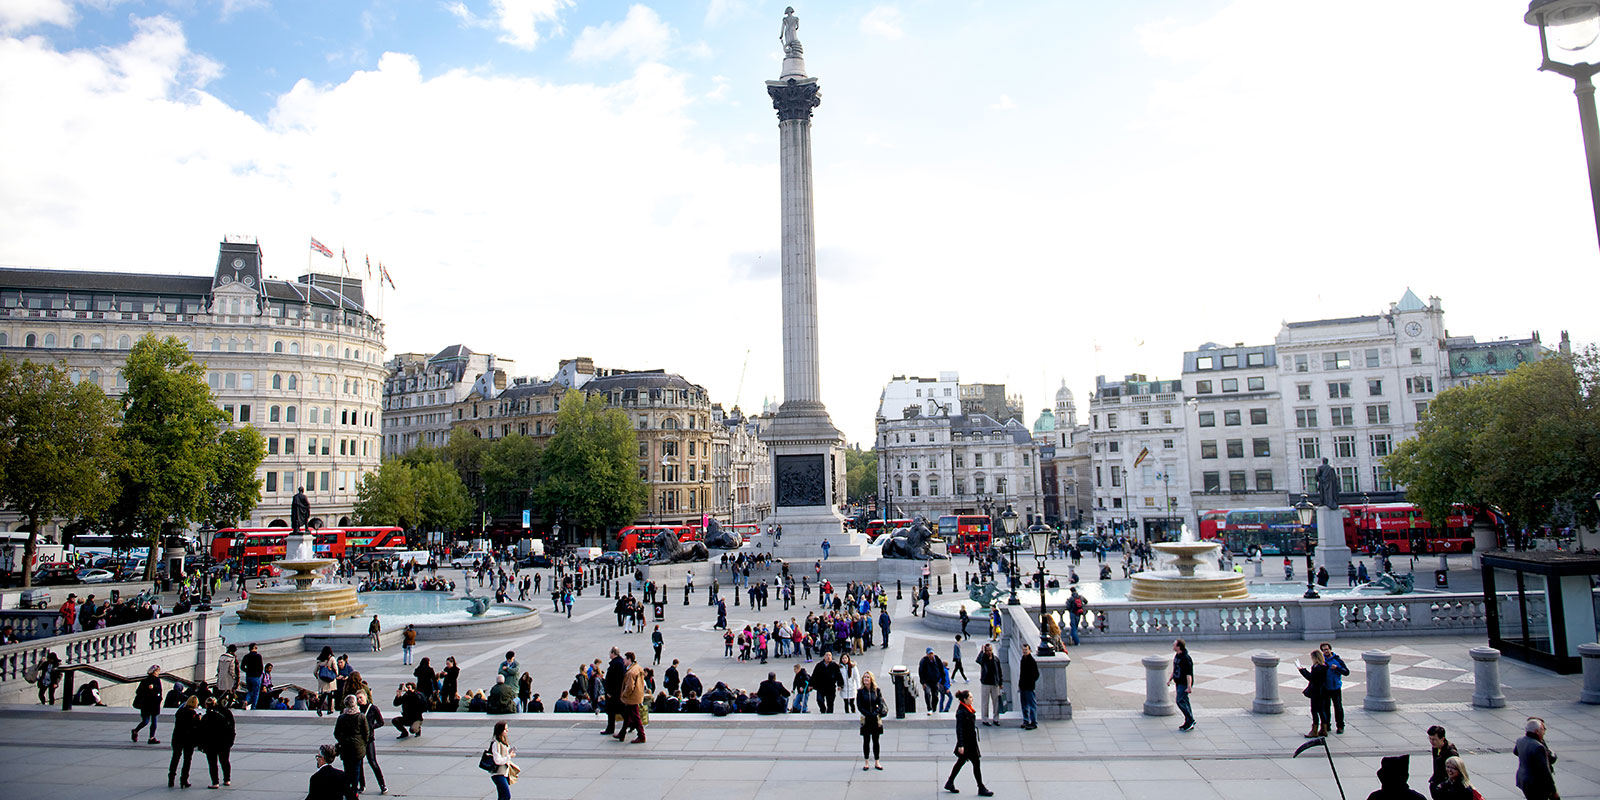 Trafalgar Square | London City Hall